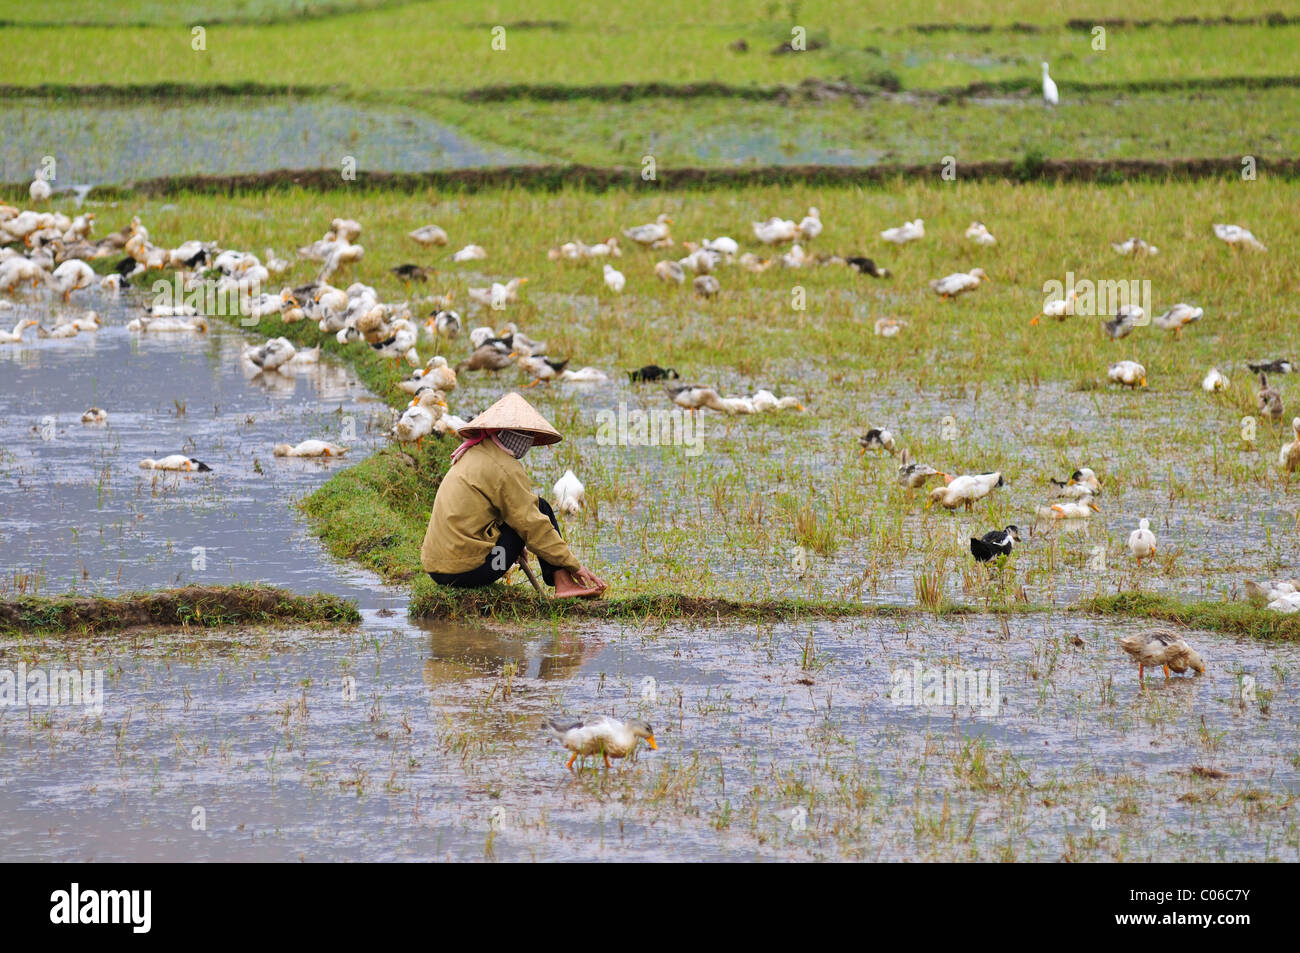 Woman herding ducks at a rice paddy, Vietnam, Asia Stock Photo